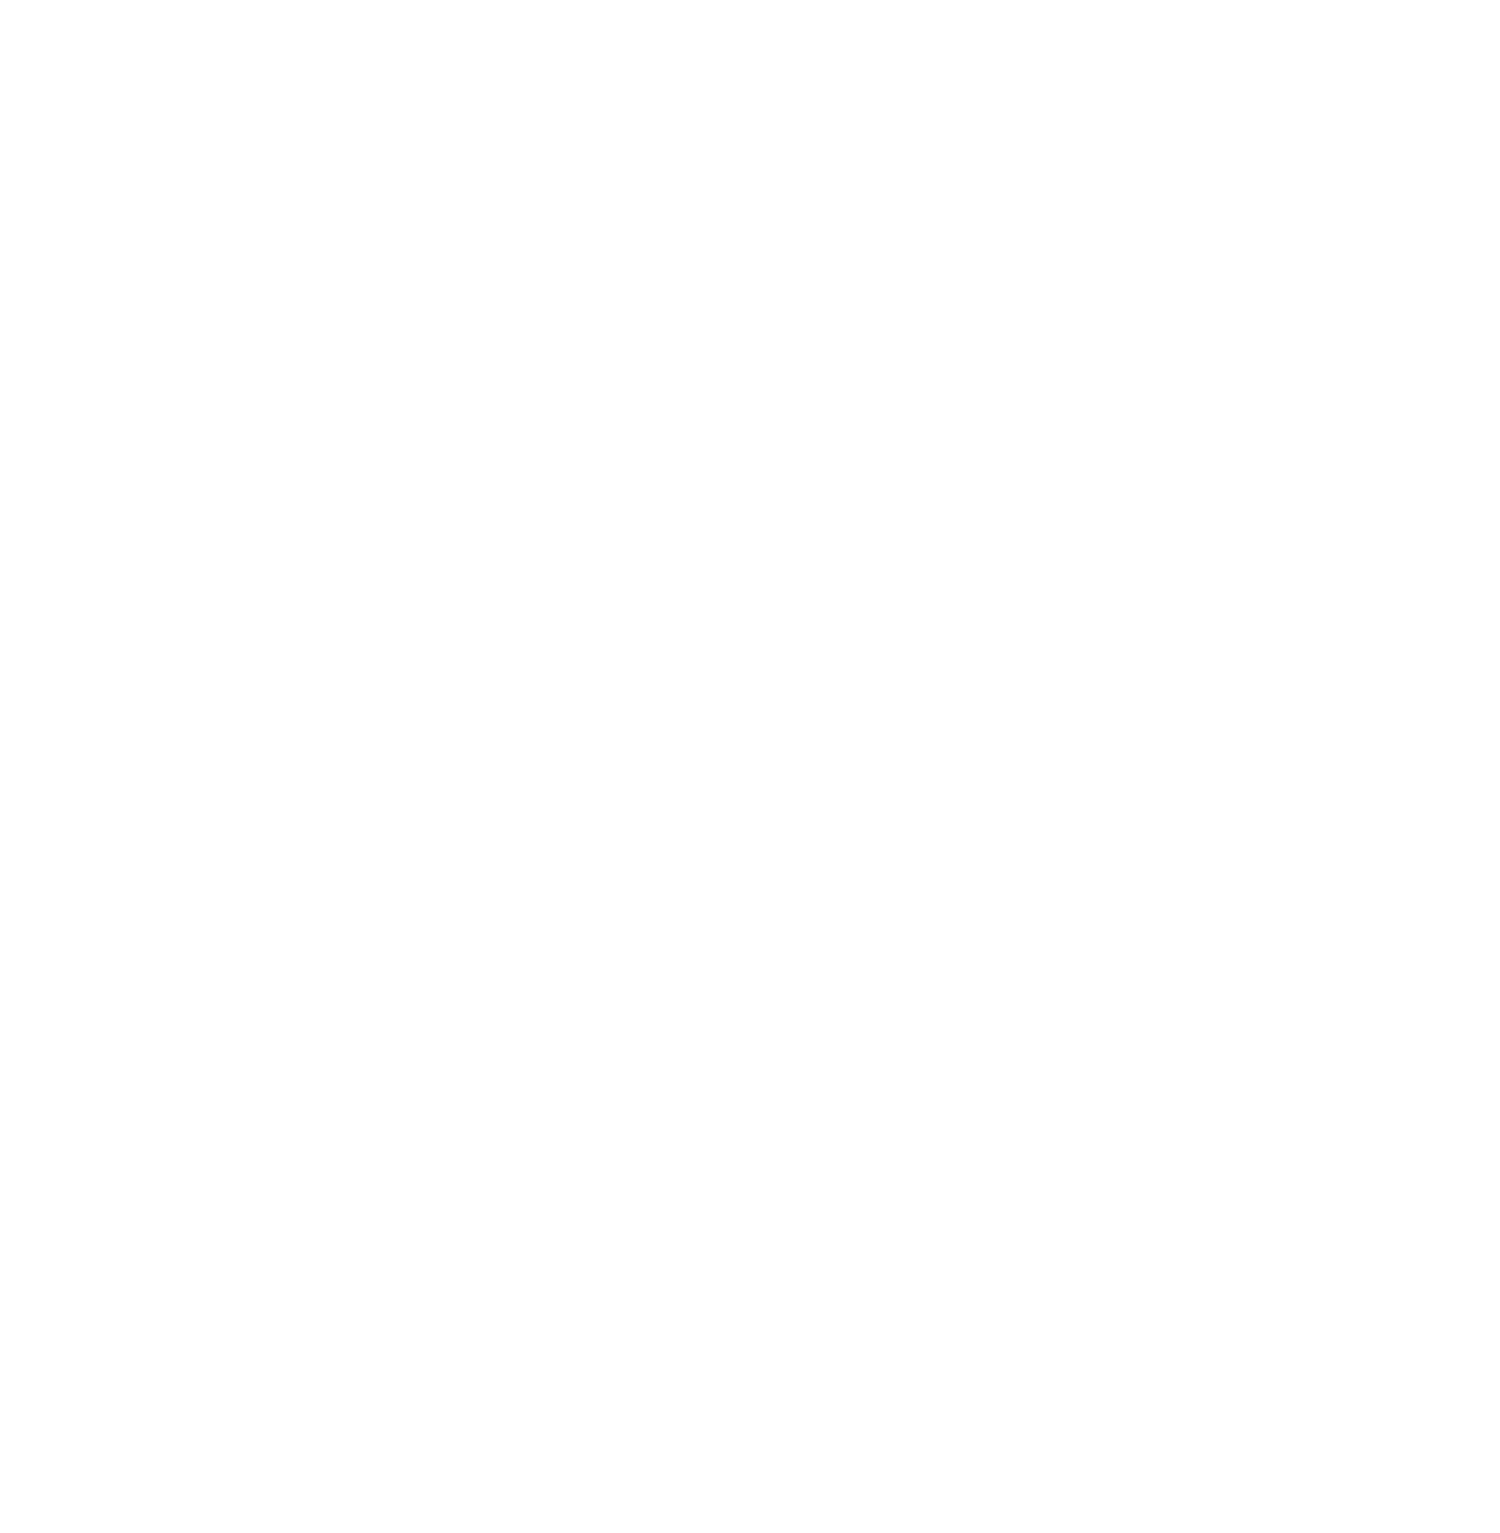 Wild Blossom Acupuncture & Wellness